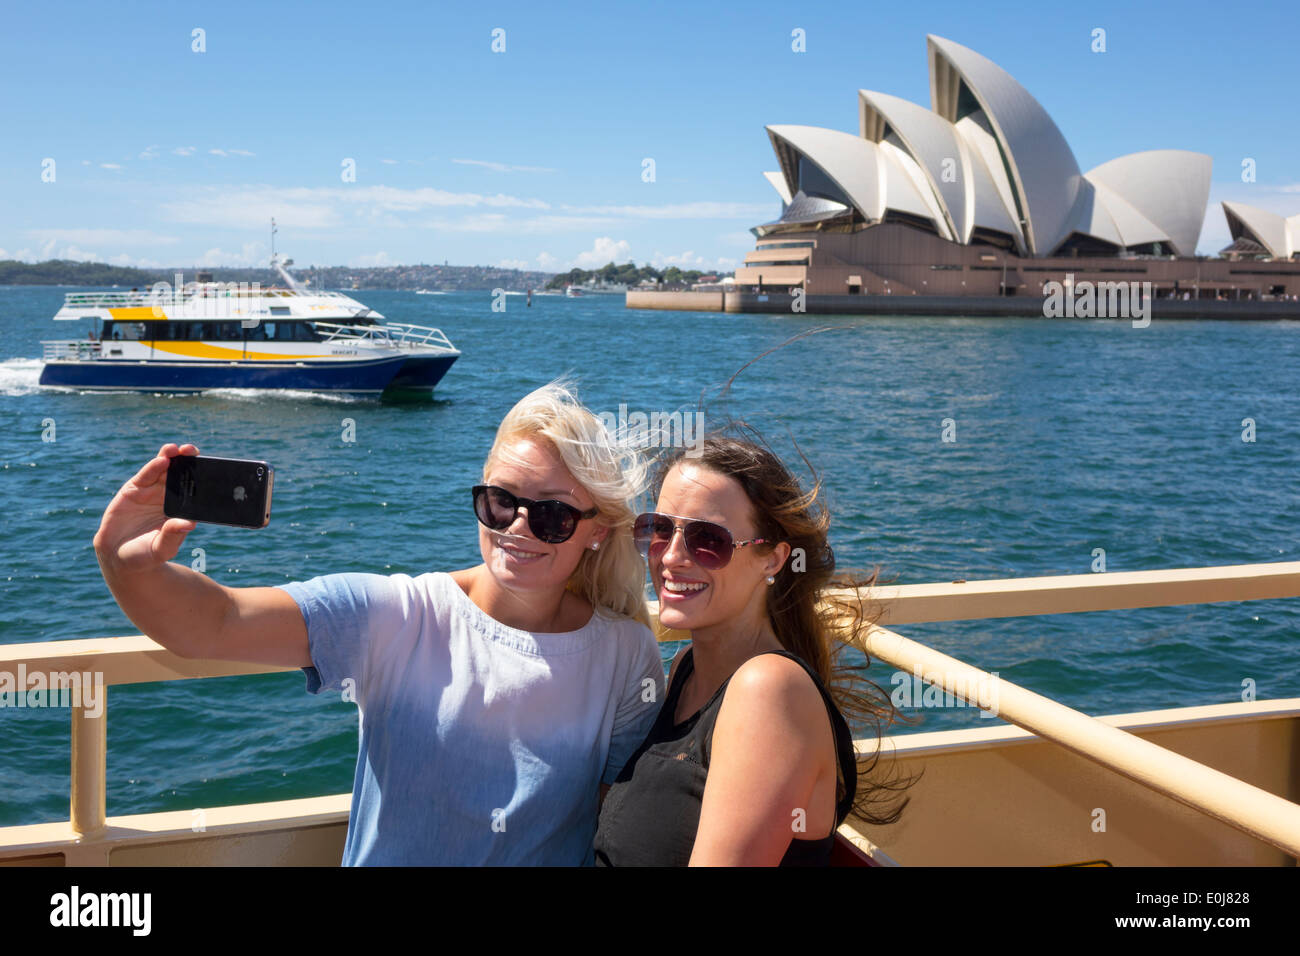 Sydney Australia,Sydney Ferries,Harbour,harbor,Opera House,ferry,upper deck,riders,passenger passengers rider riders,woman female women,friends,posing Stock Photo